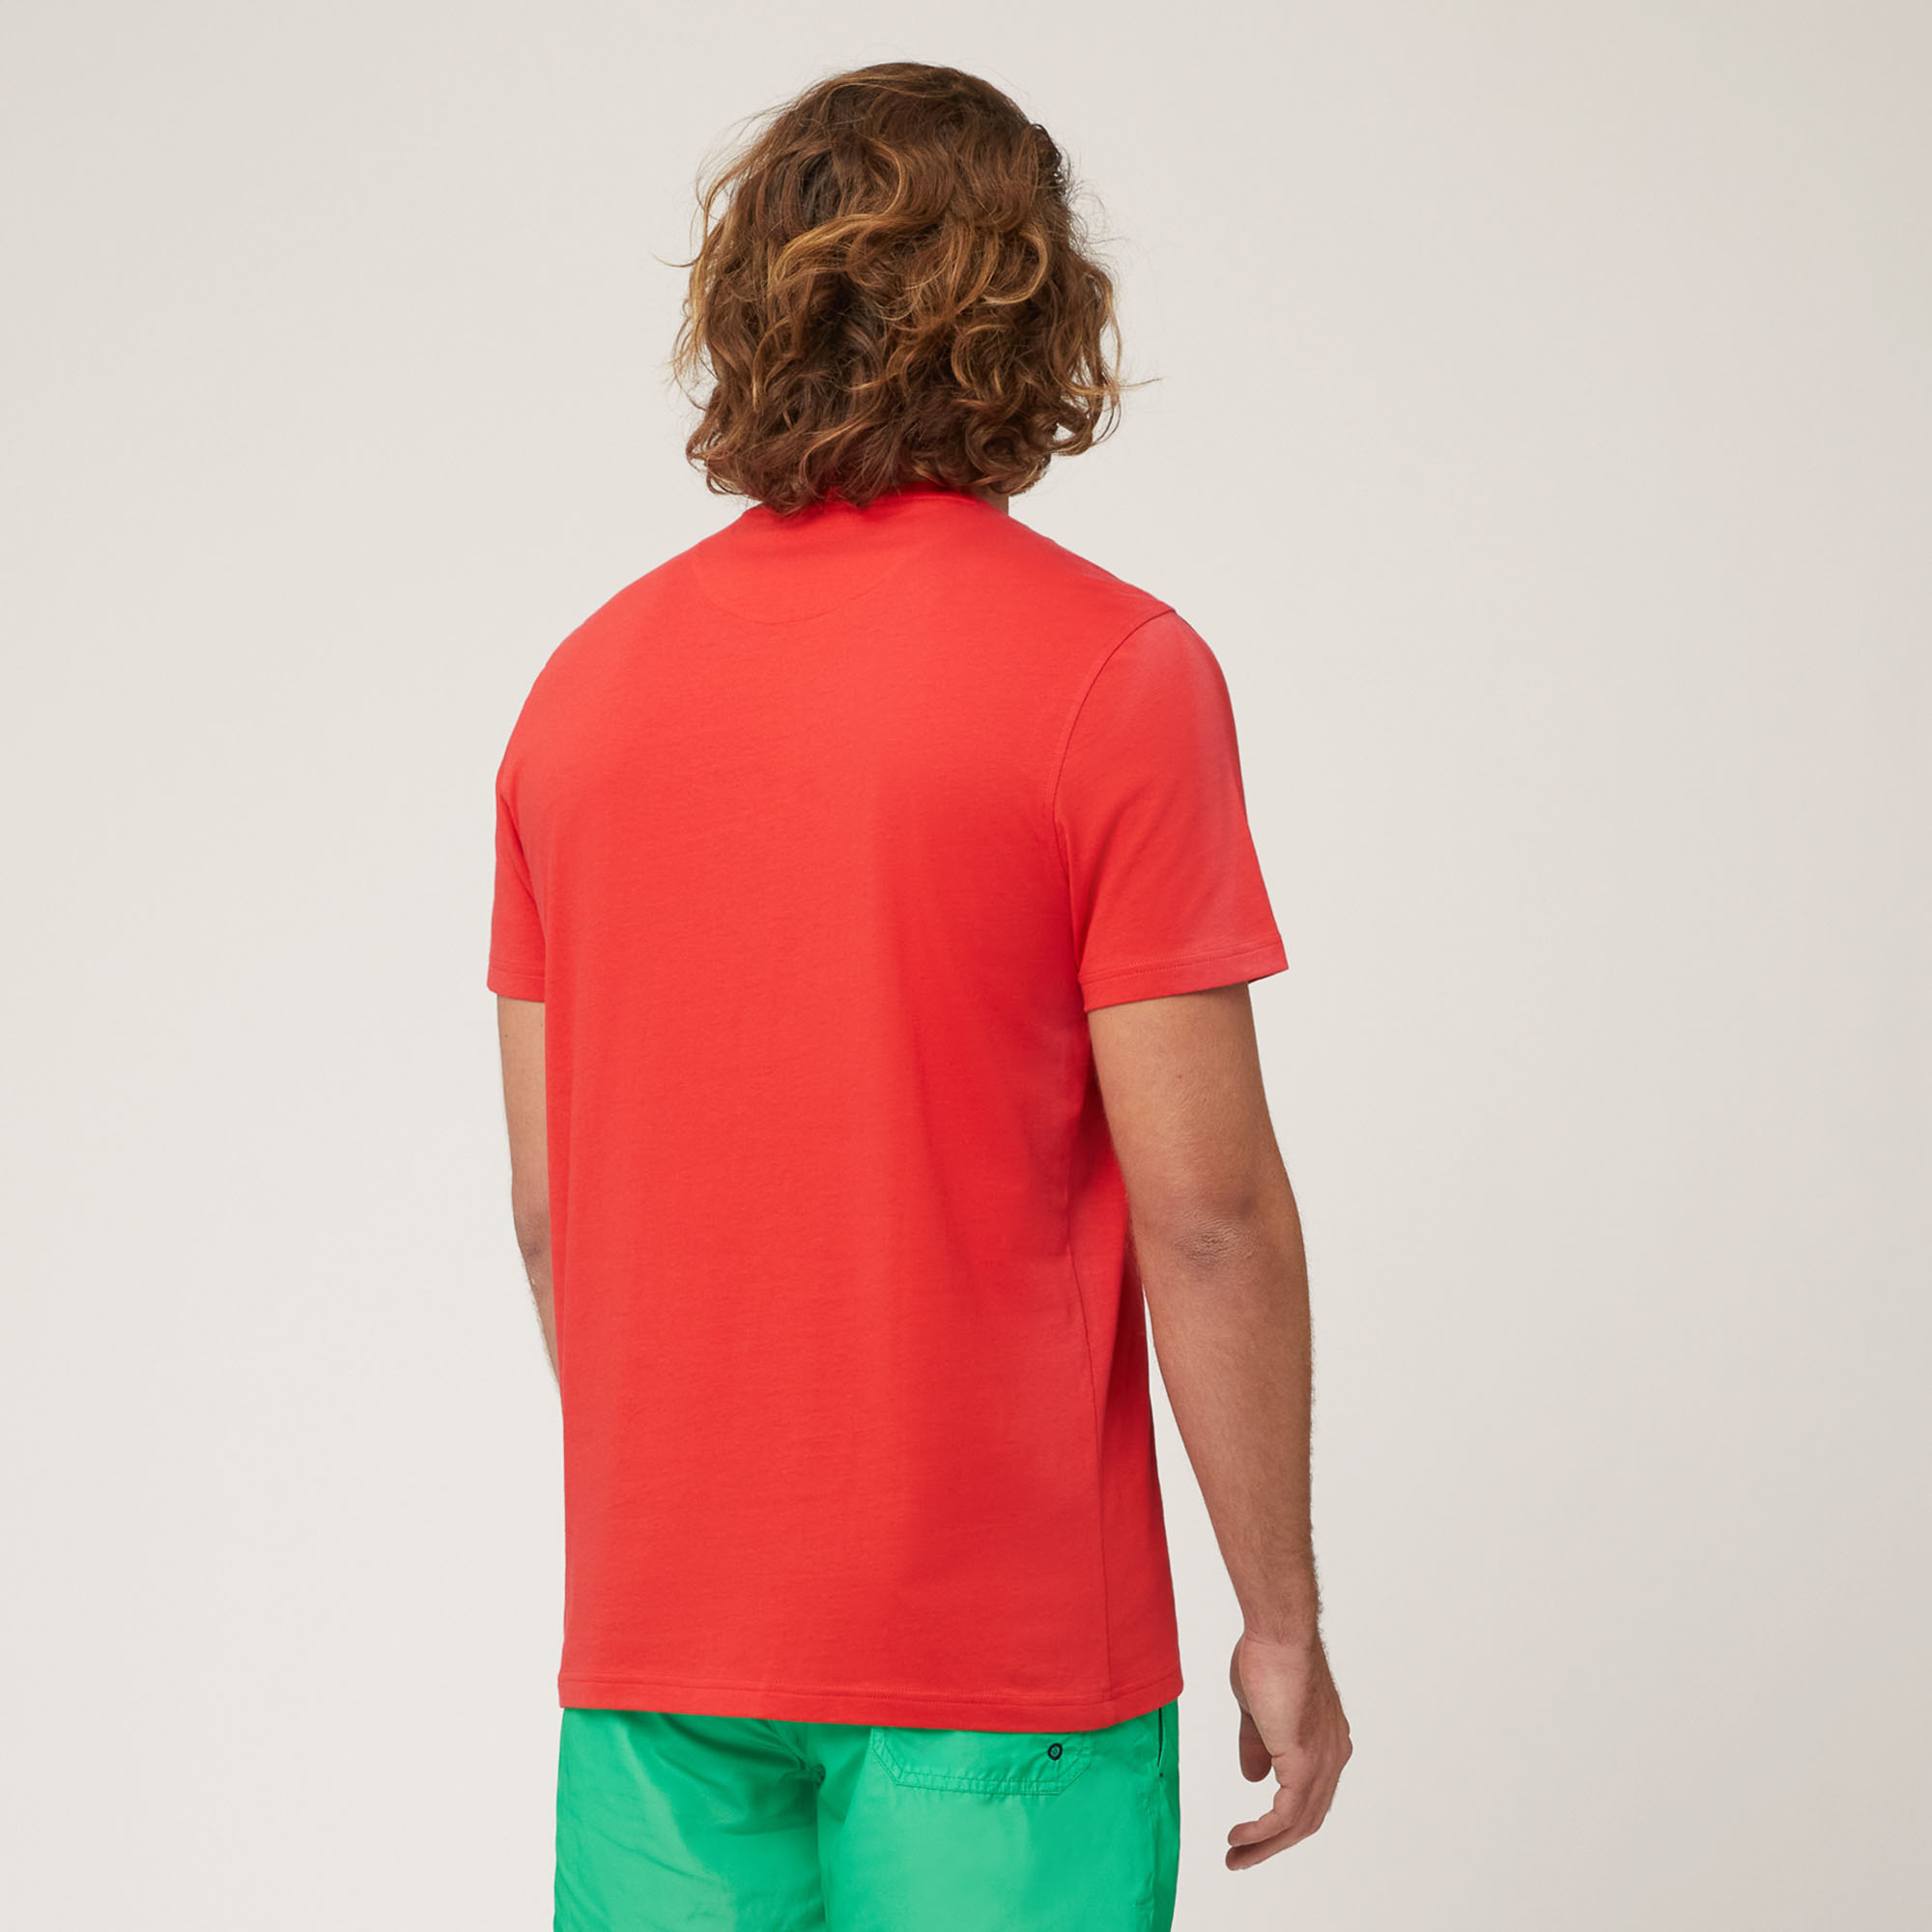 T-Shirt Costiera Amalfitana, Rosso Chiaro, large image number 1